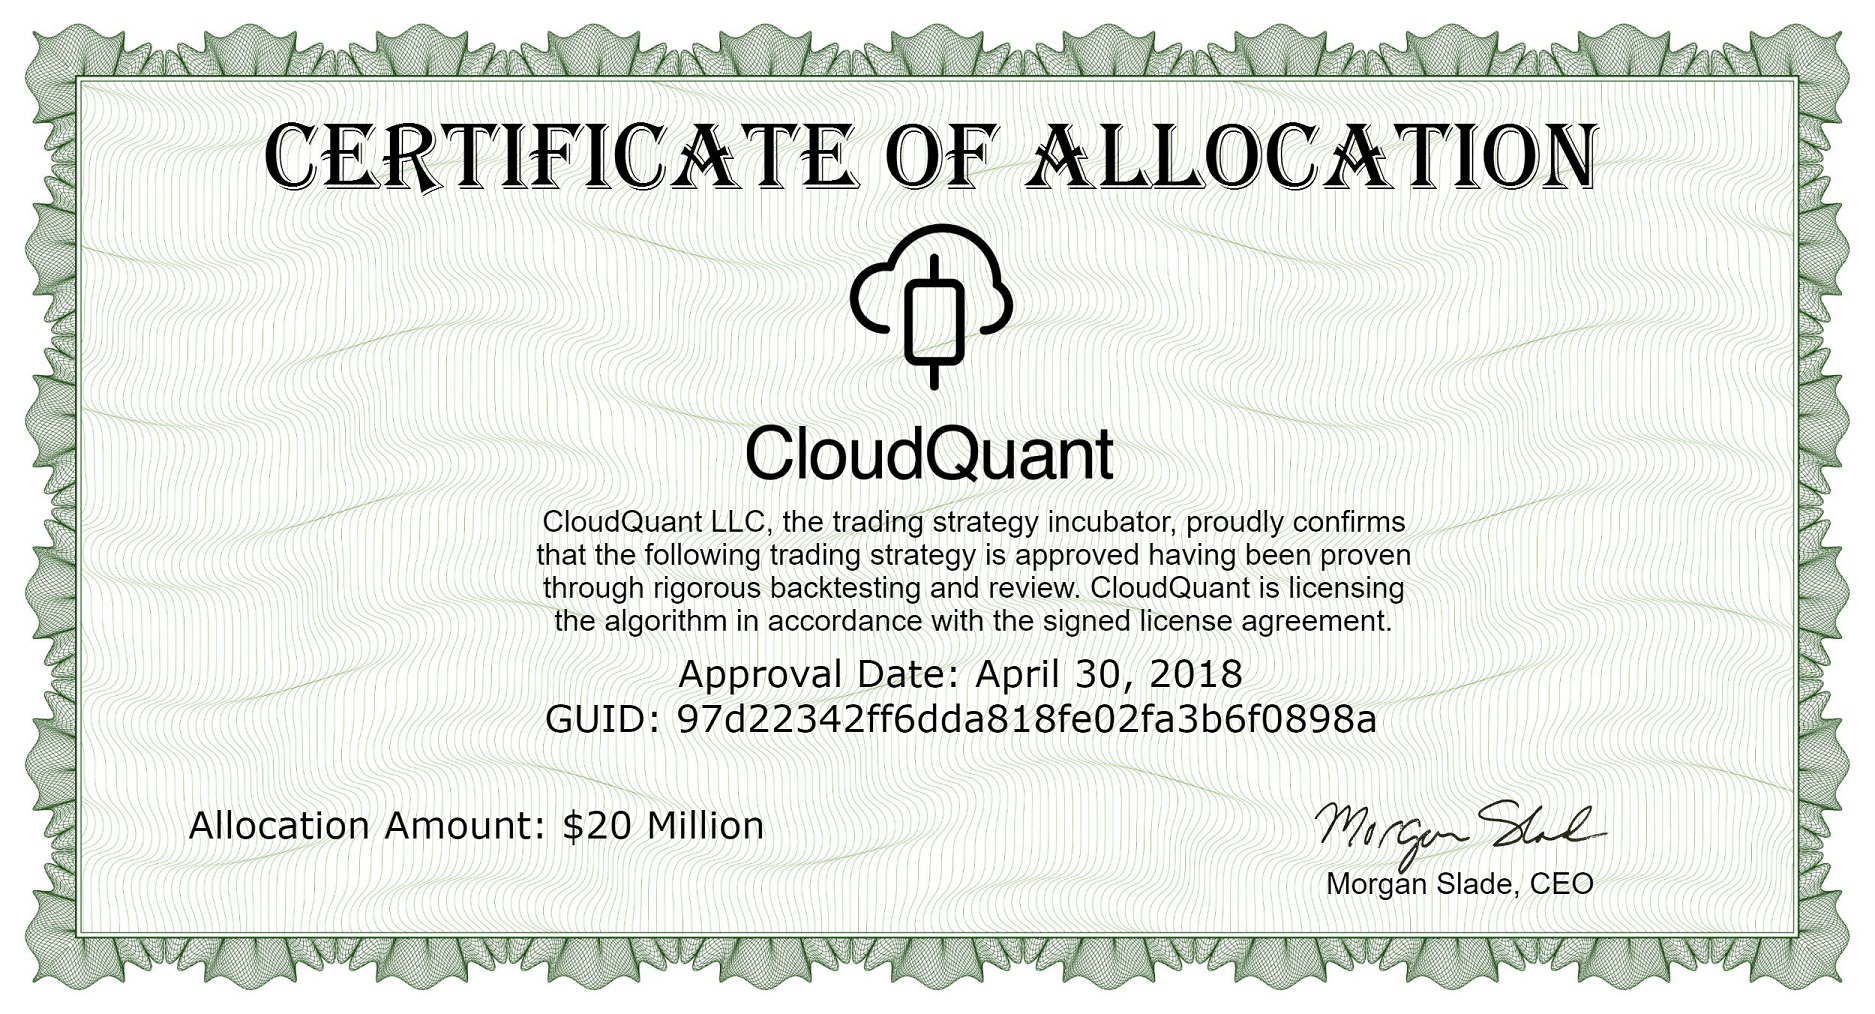 CloudQuant Allocates Risk Capital to Crowd-Resourced Trading Algorithm